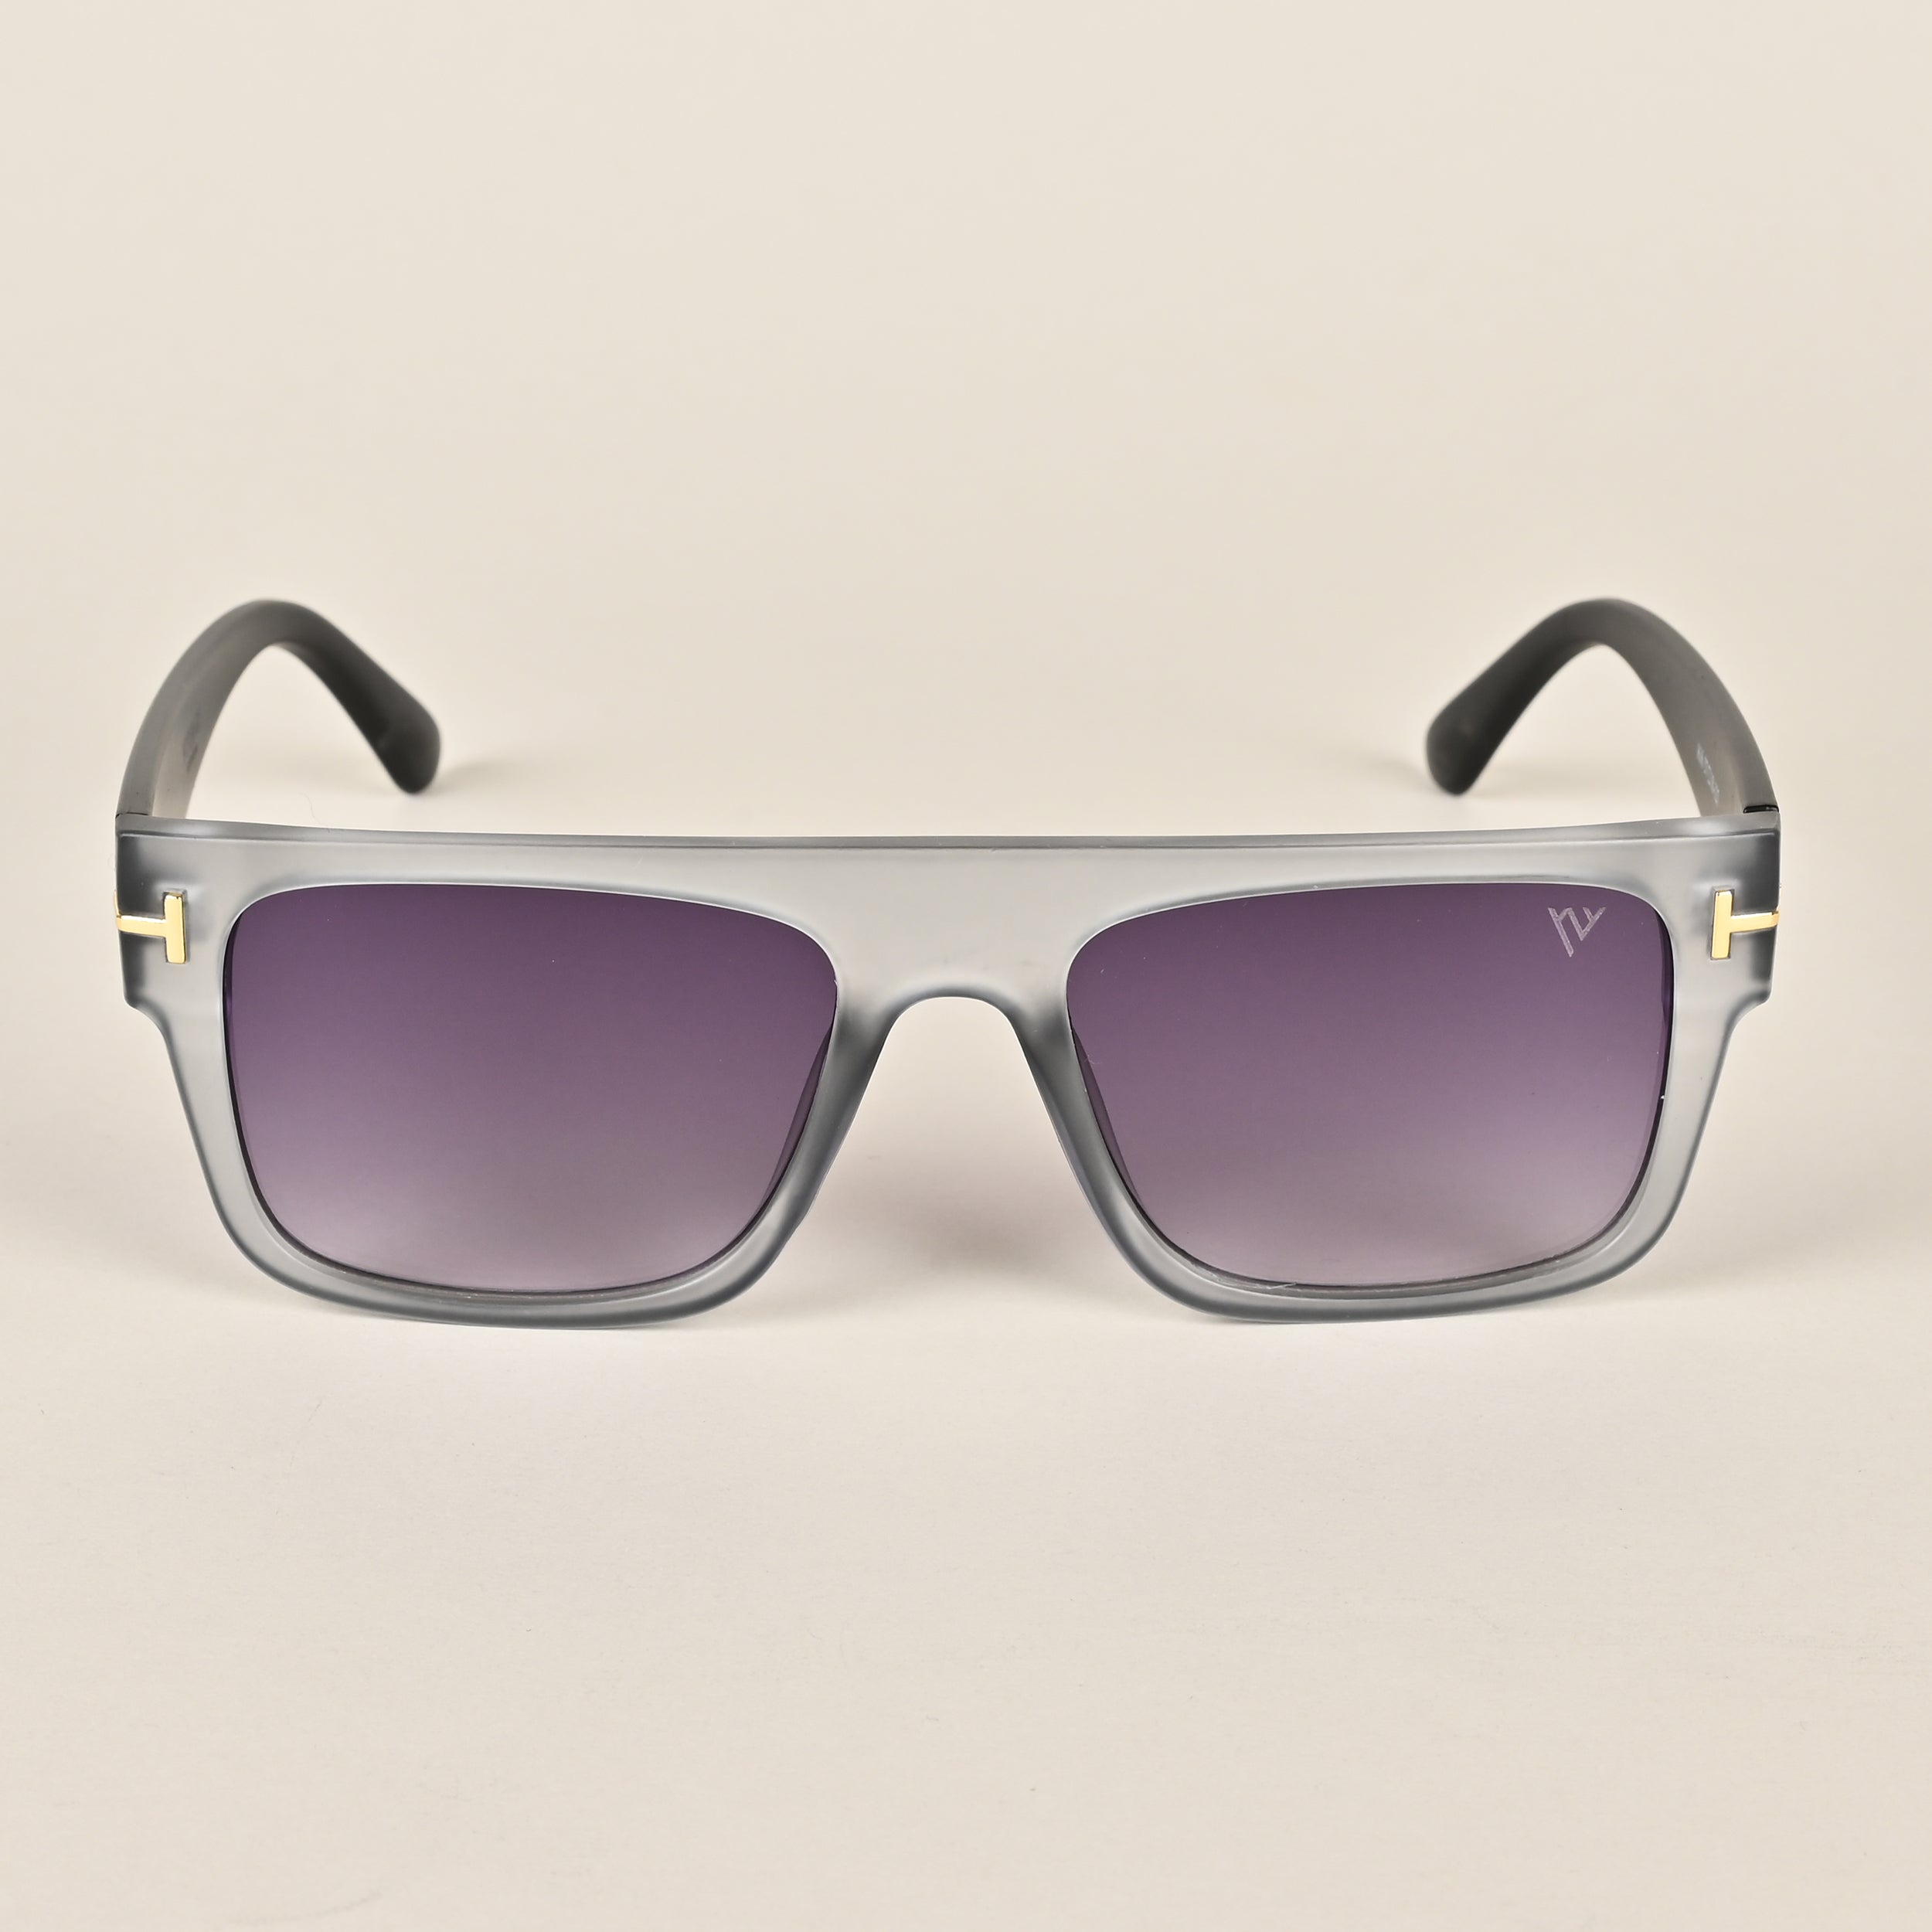 Voyage Grey Wayfarer Sunglasses (A16MG3933)